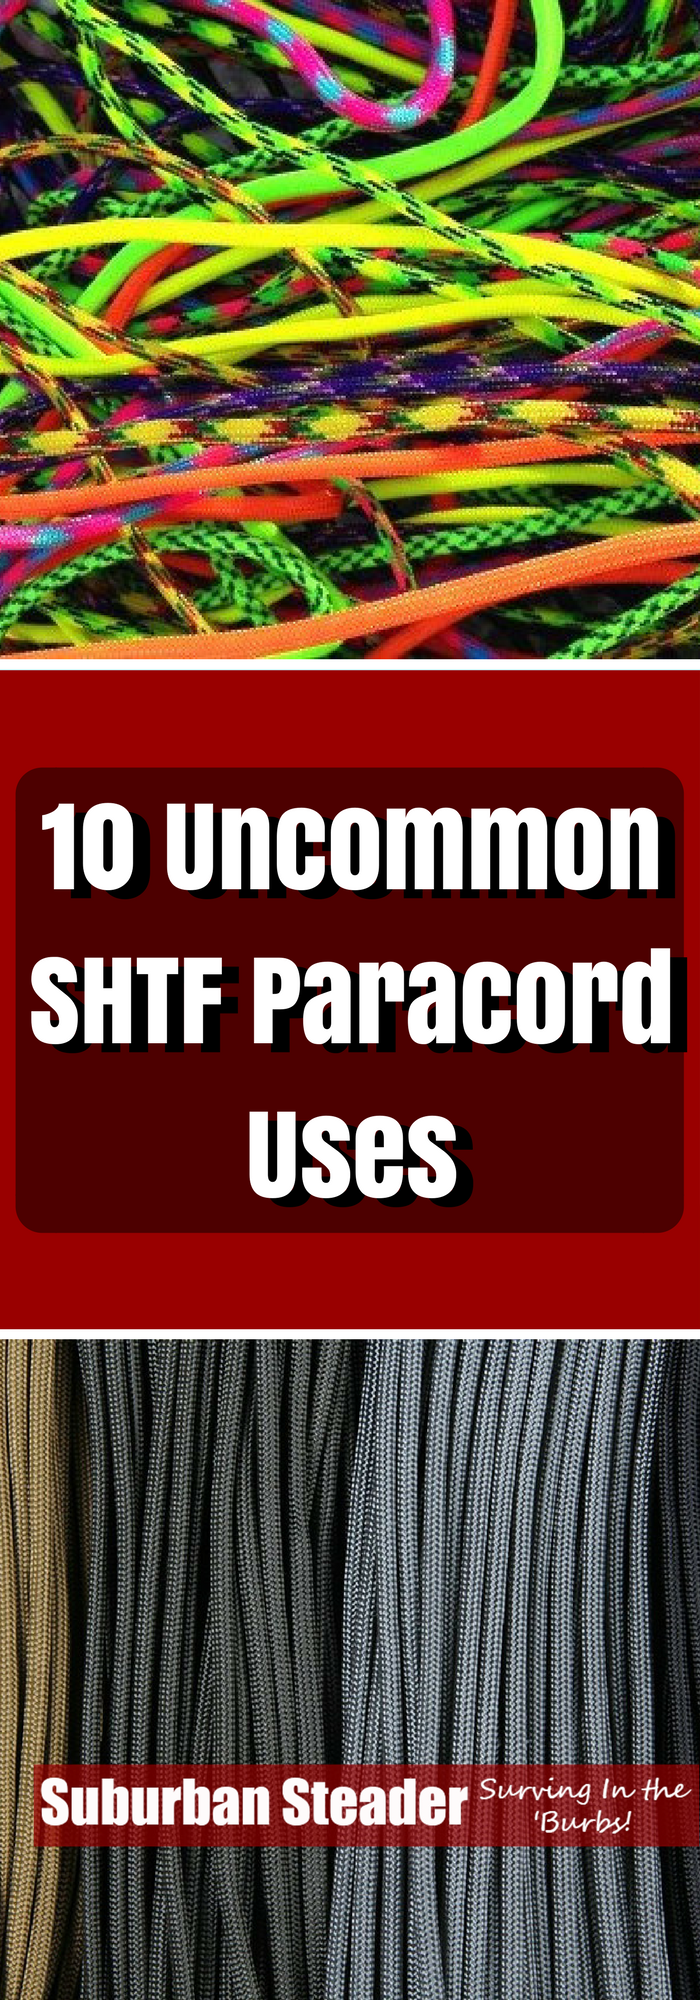 10 Uncommon SHTF Paracord Uses